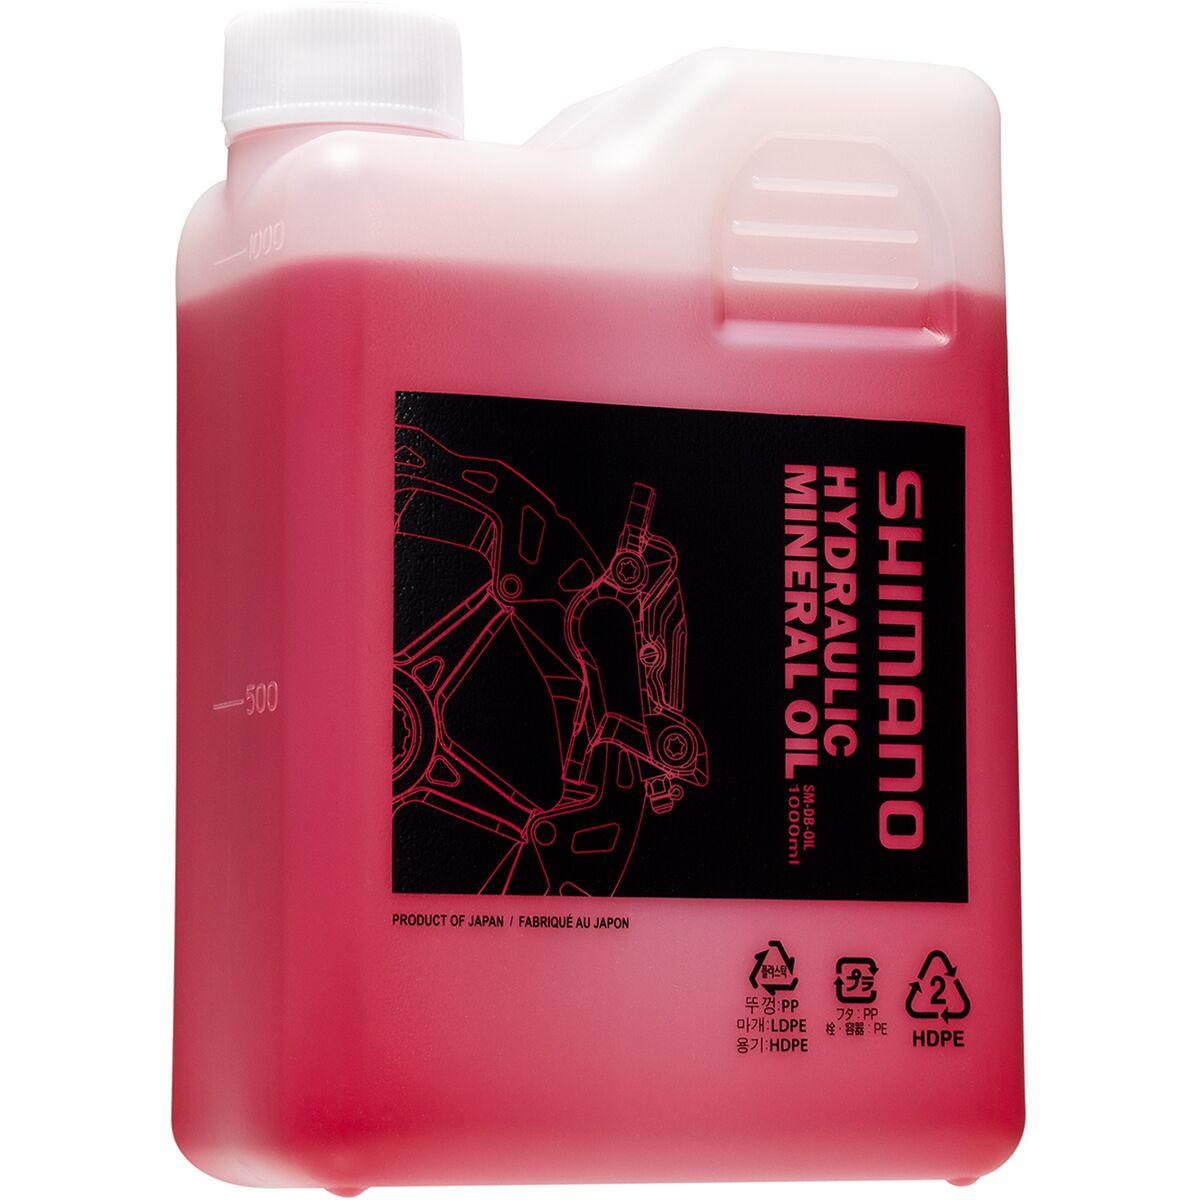 Shimano Hydraulic Mineral Oil